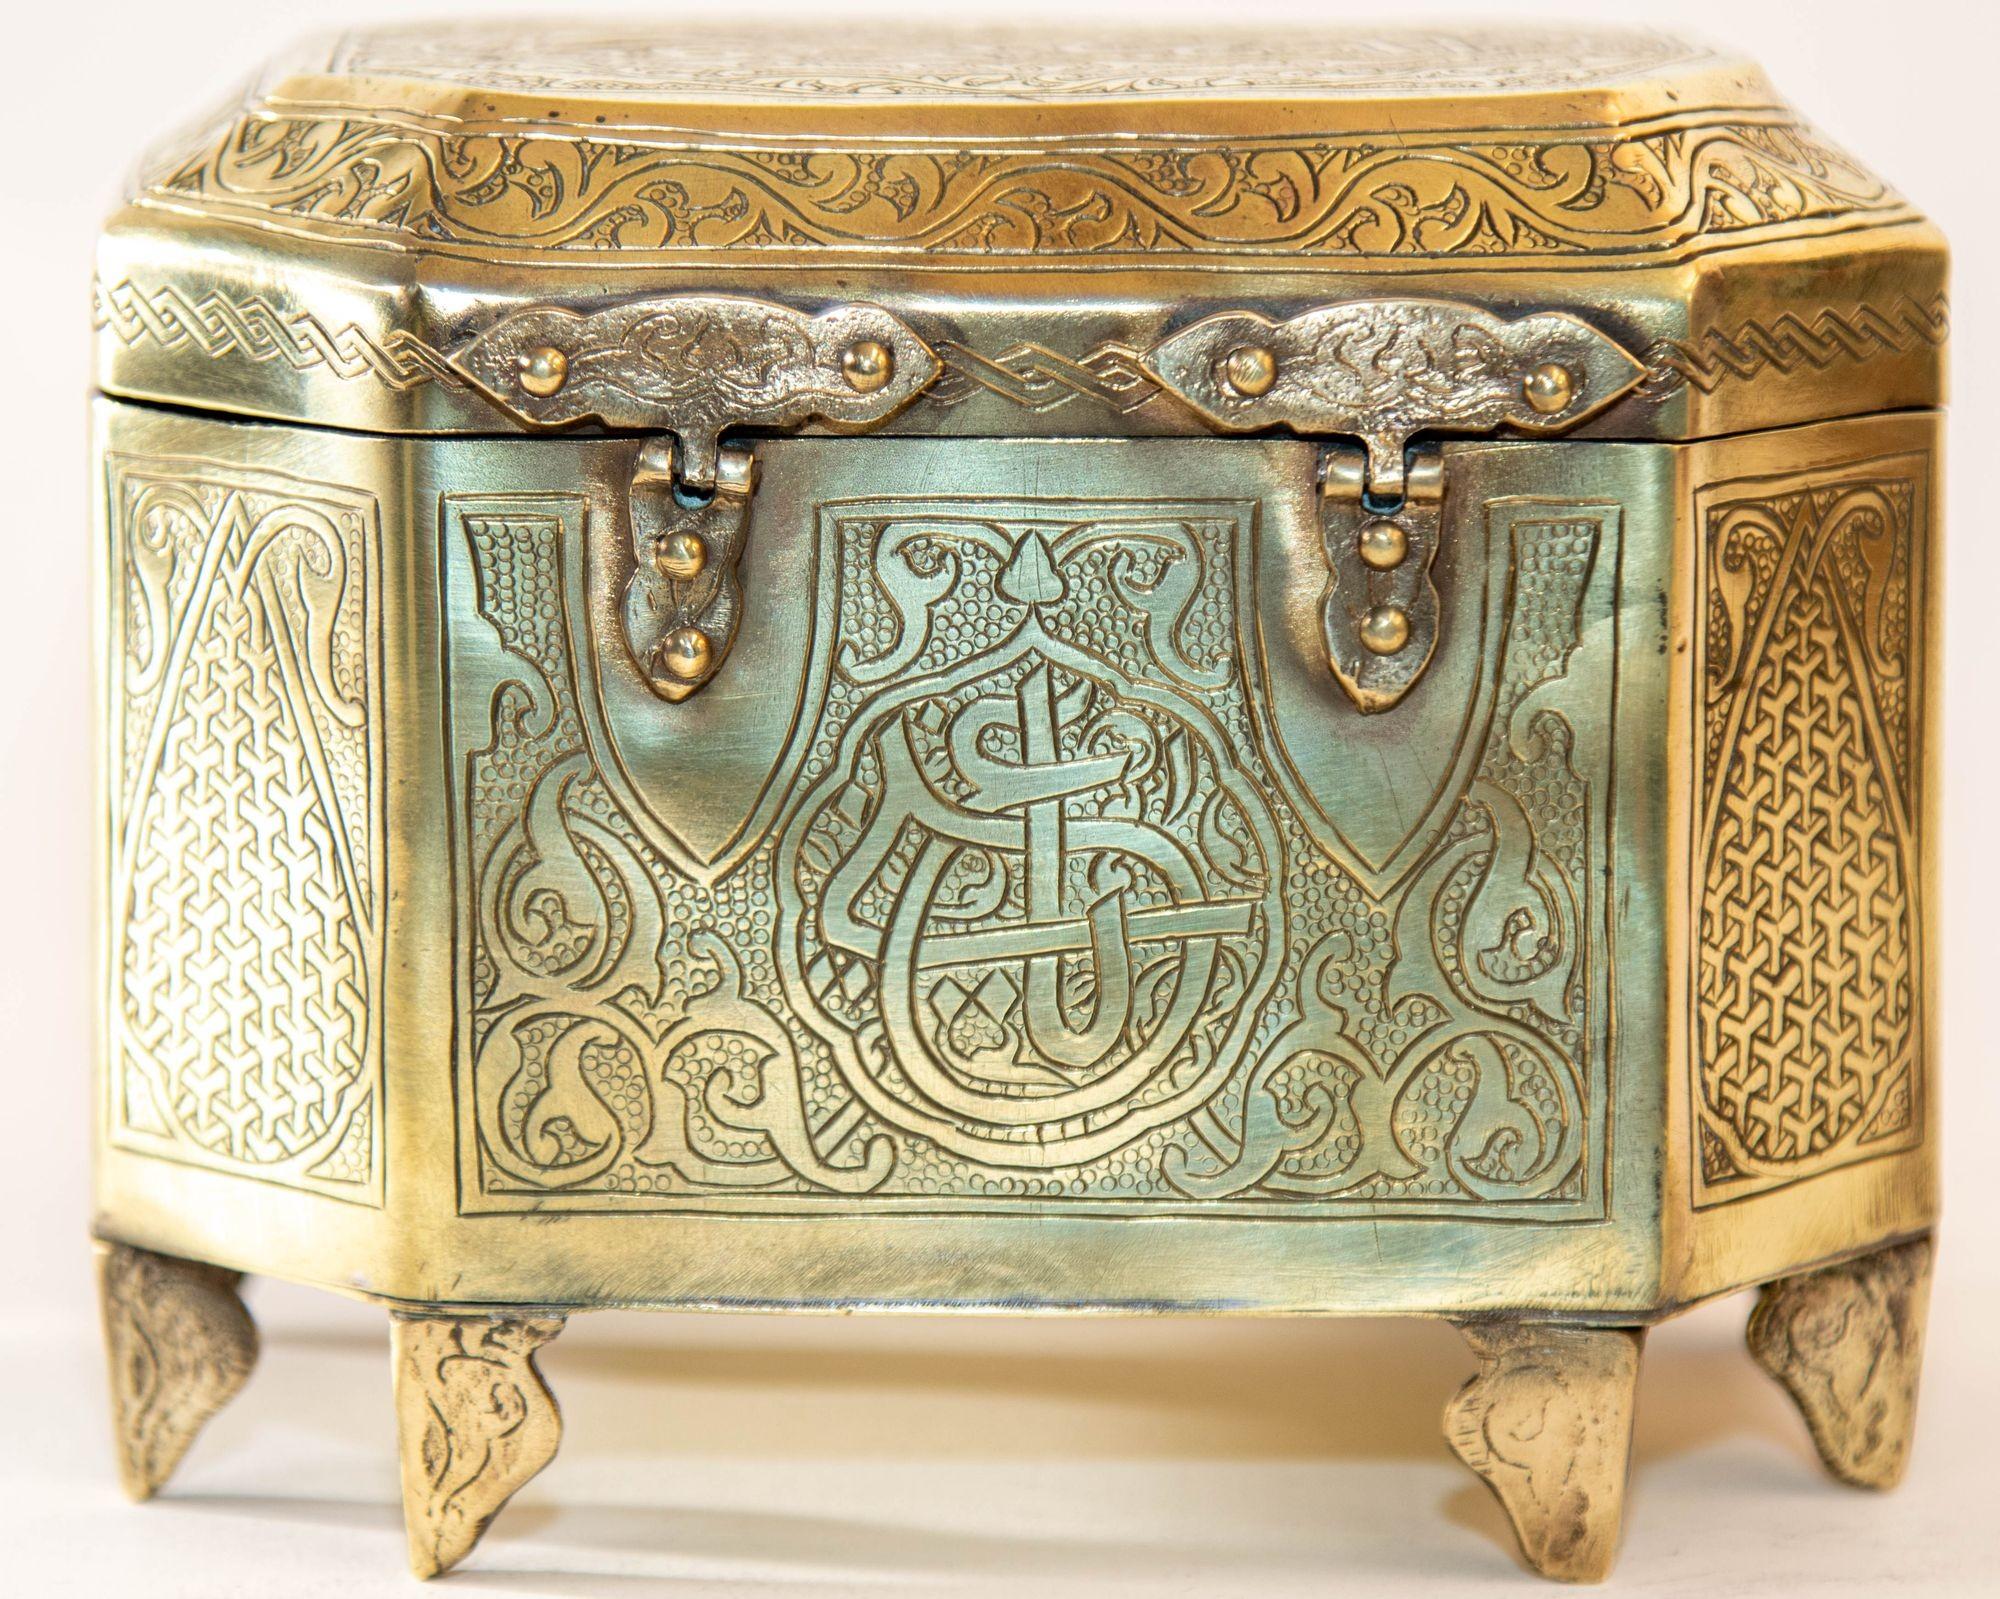 20th Century 1920 Persian Brass Jewelry Box in Mamluk Revival Damascene Moorish Islamic Style For Sale